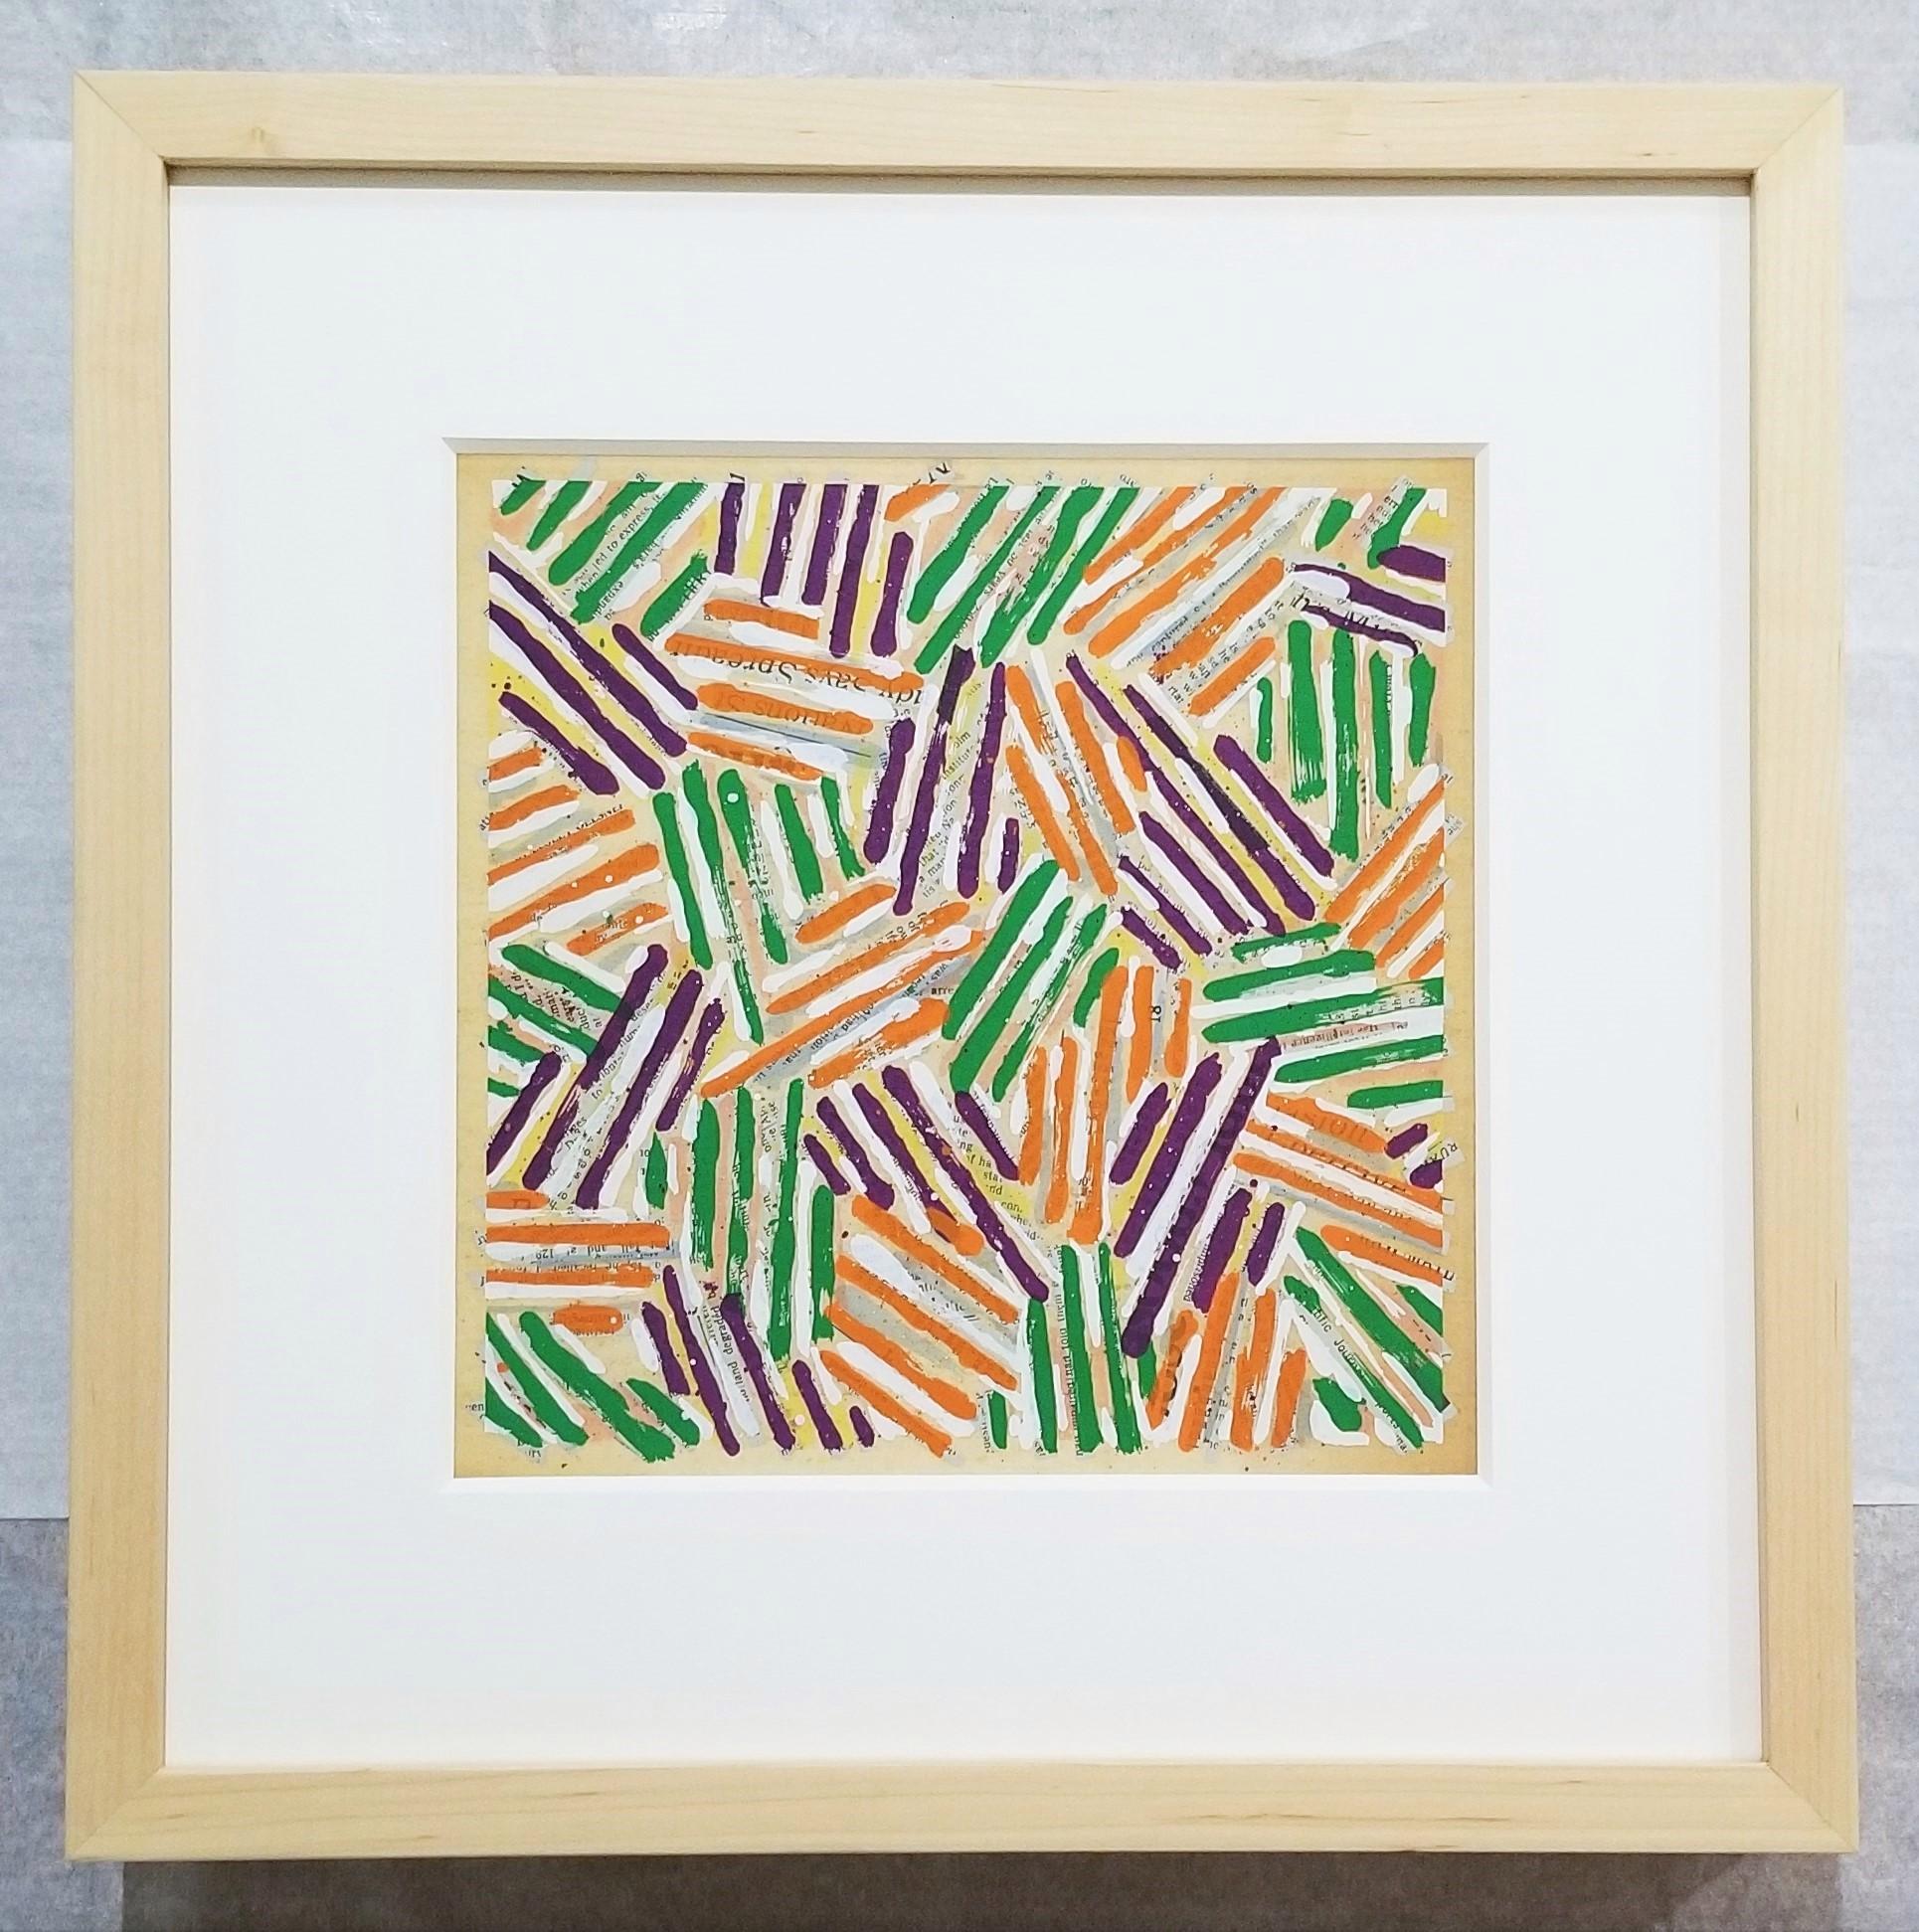 Untitled (Cross Hatch) /// Abstract Geometric Jasper Johns Minimal Screenprint For Sale 1